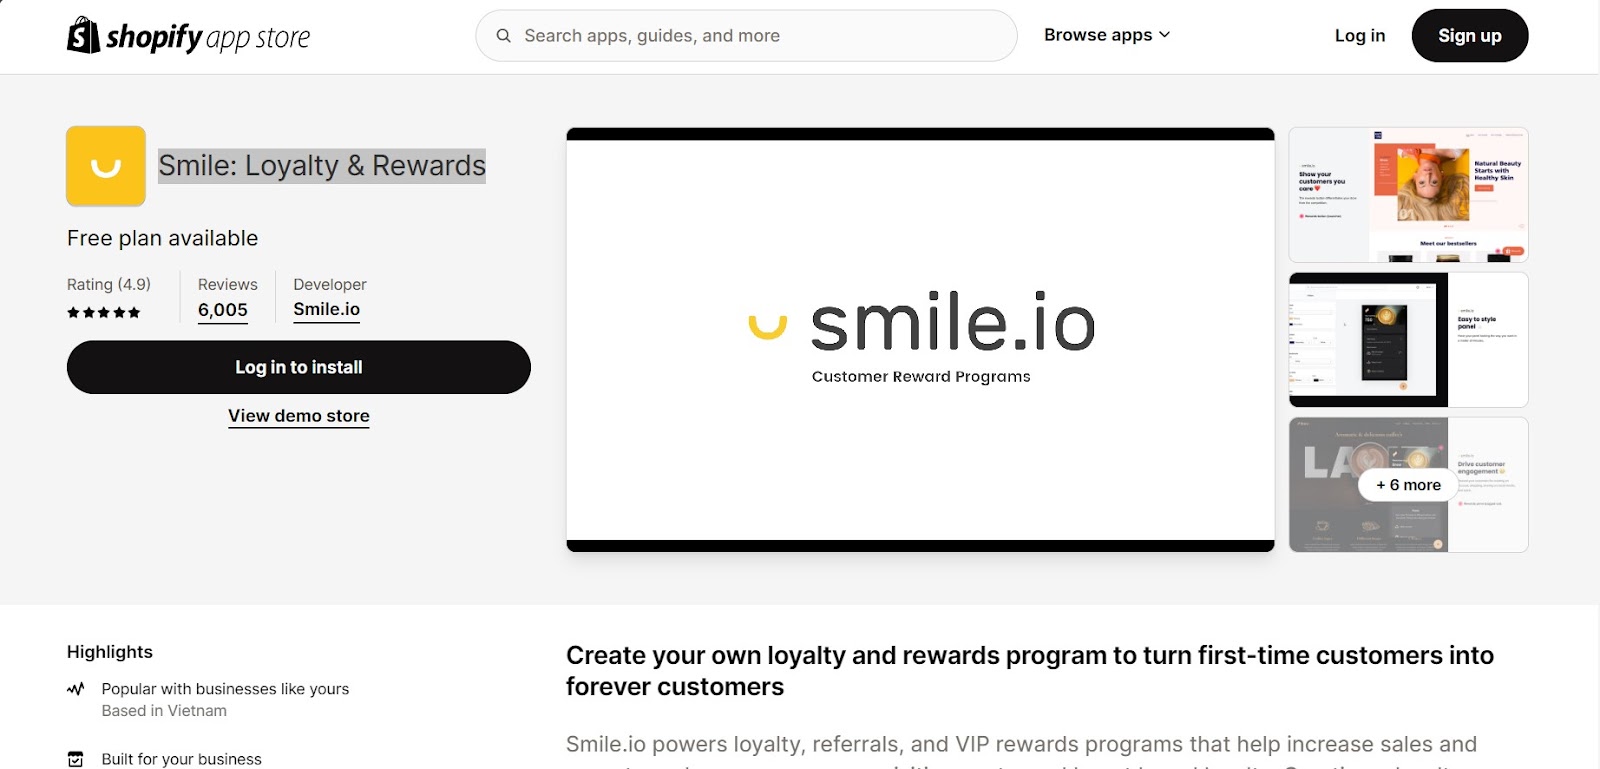 Smile: Loyalty & Rewards